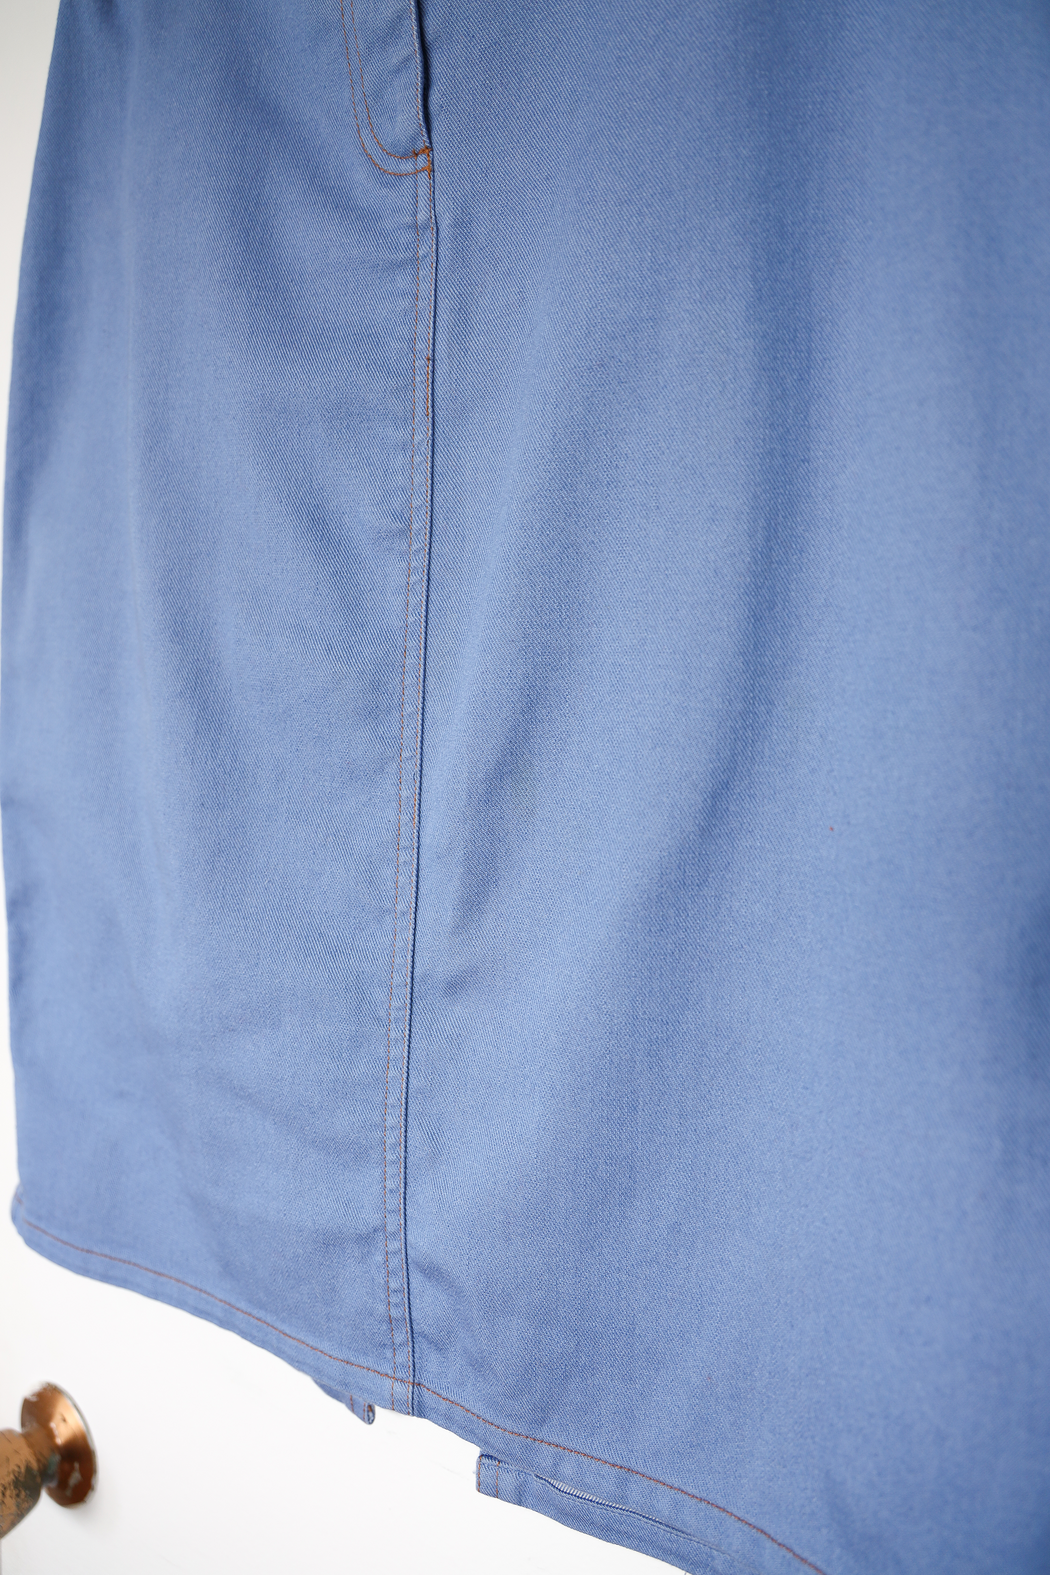 Cornflower Blue Pencil Skirt / Size 8